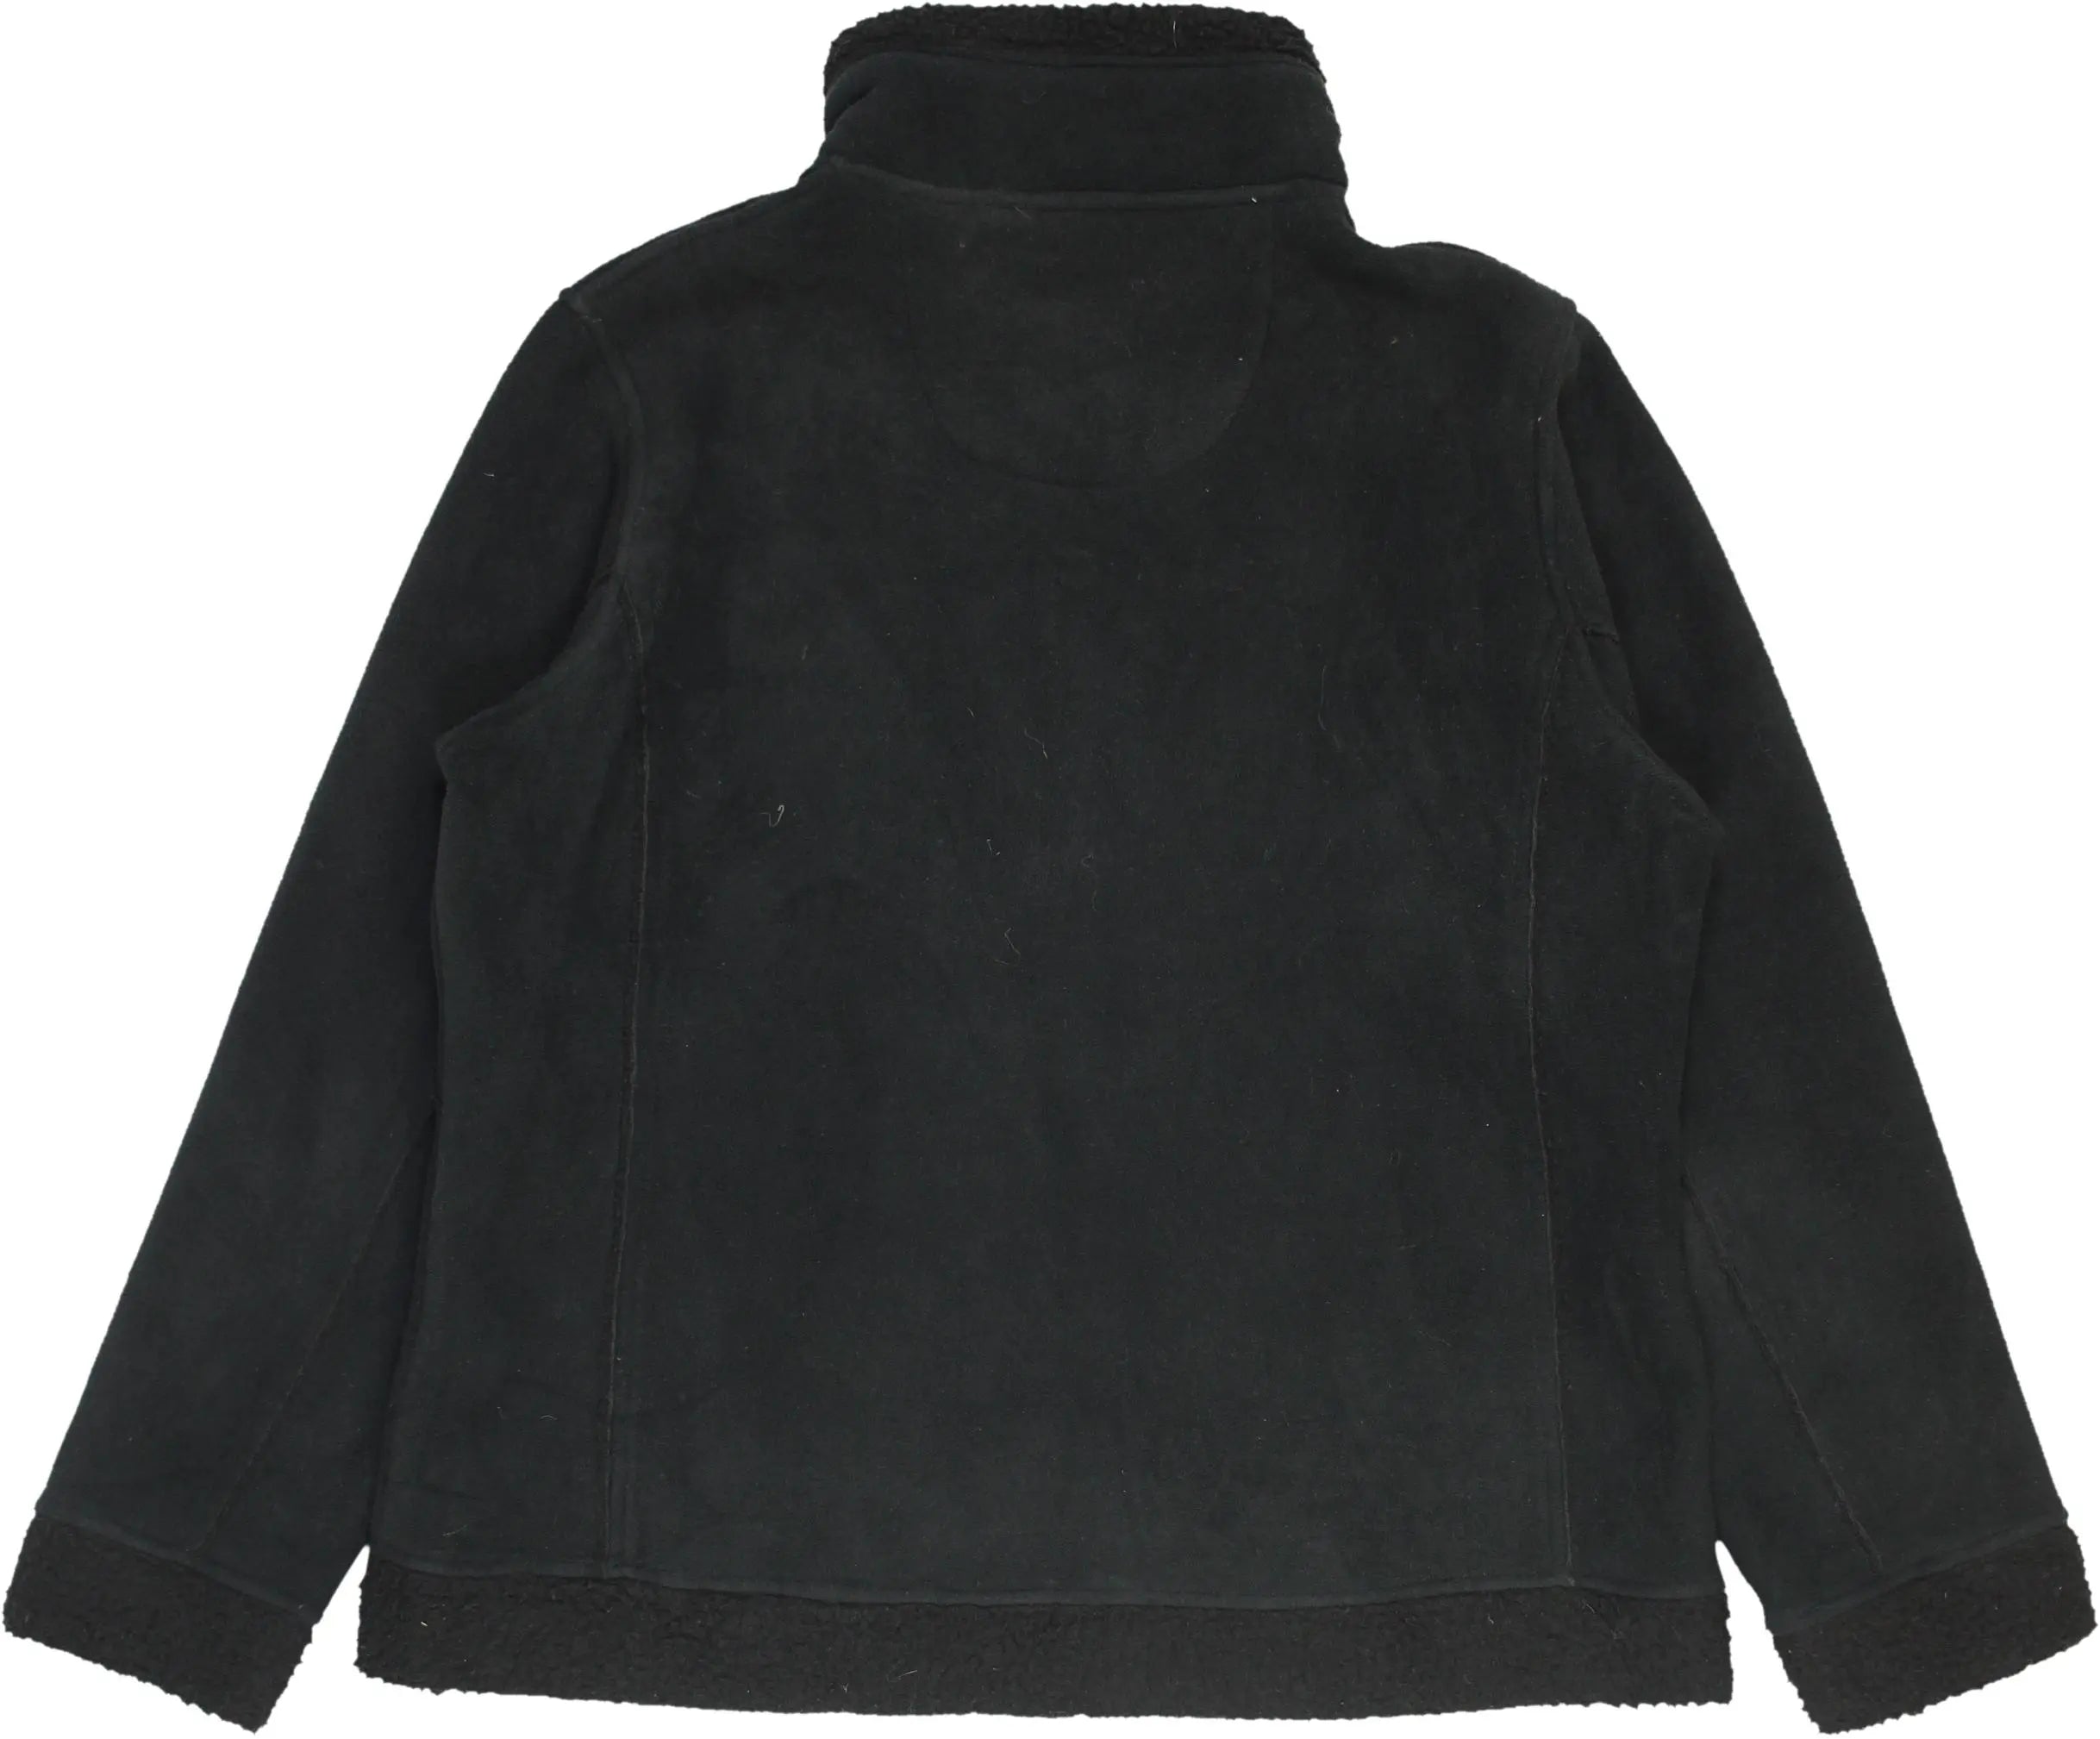 Regatta - Fleece Jacket- ThriftTale.com - Vintage and second handclothing